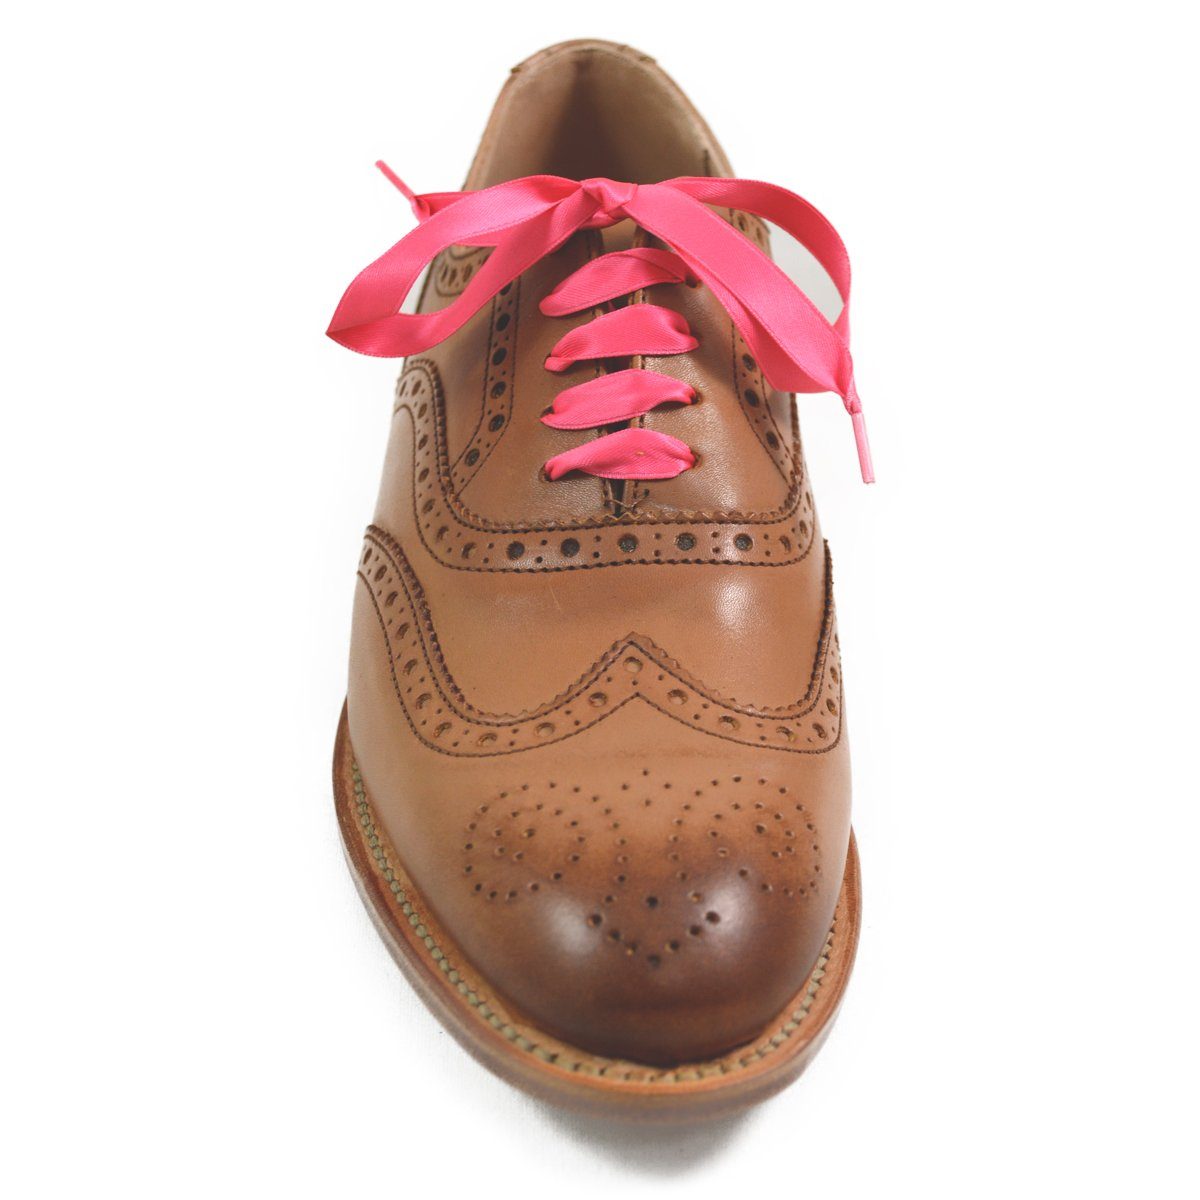 ribbon shoe laces uk